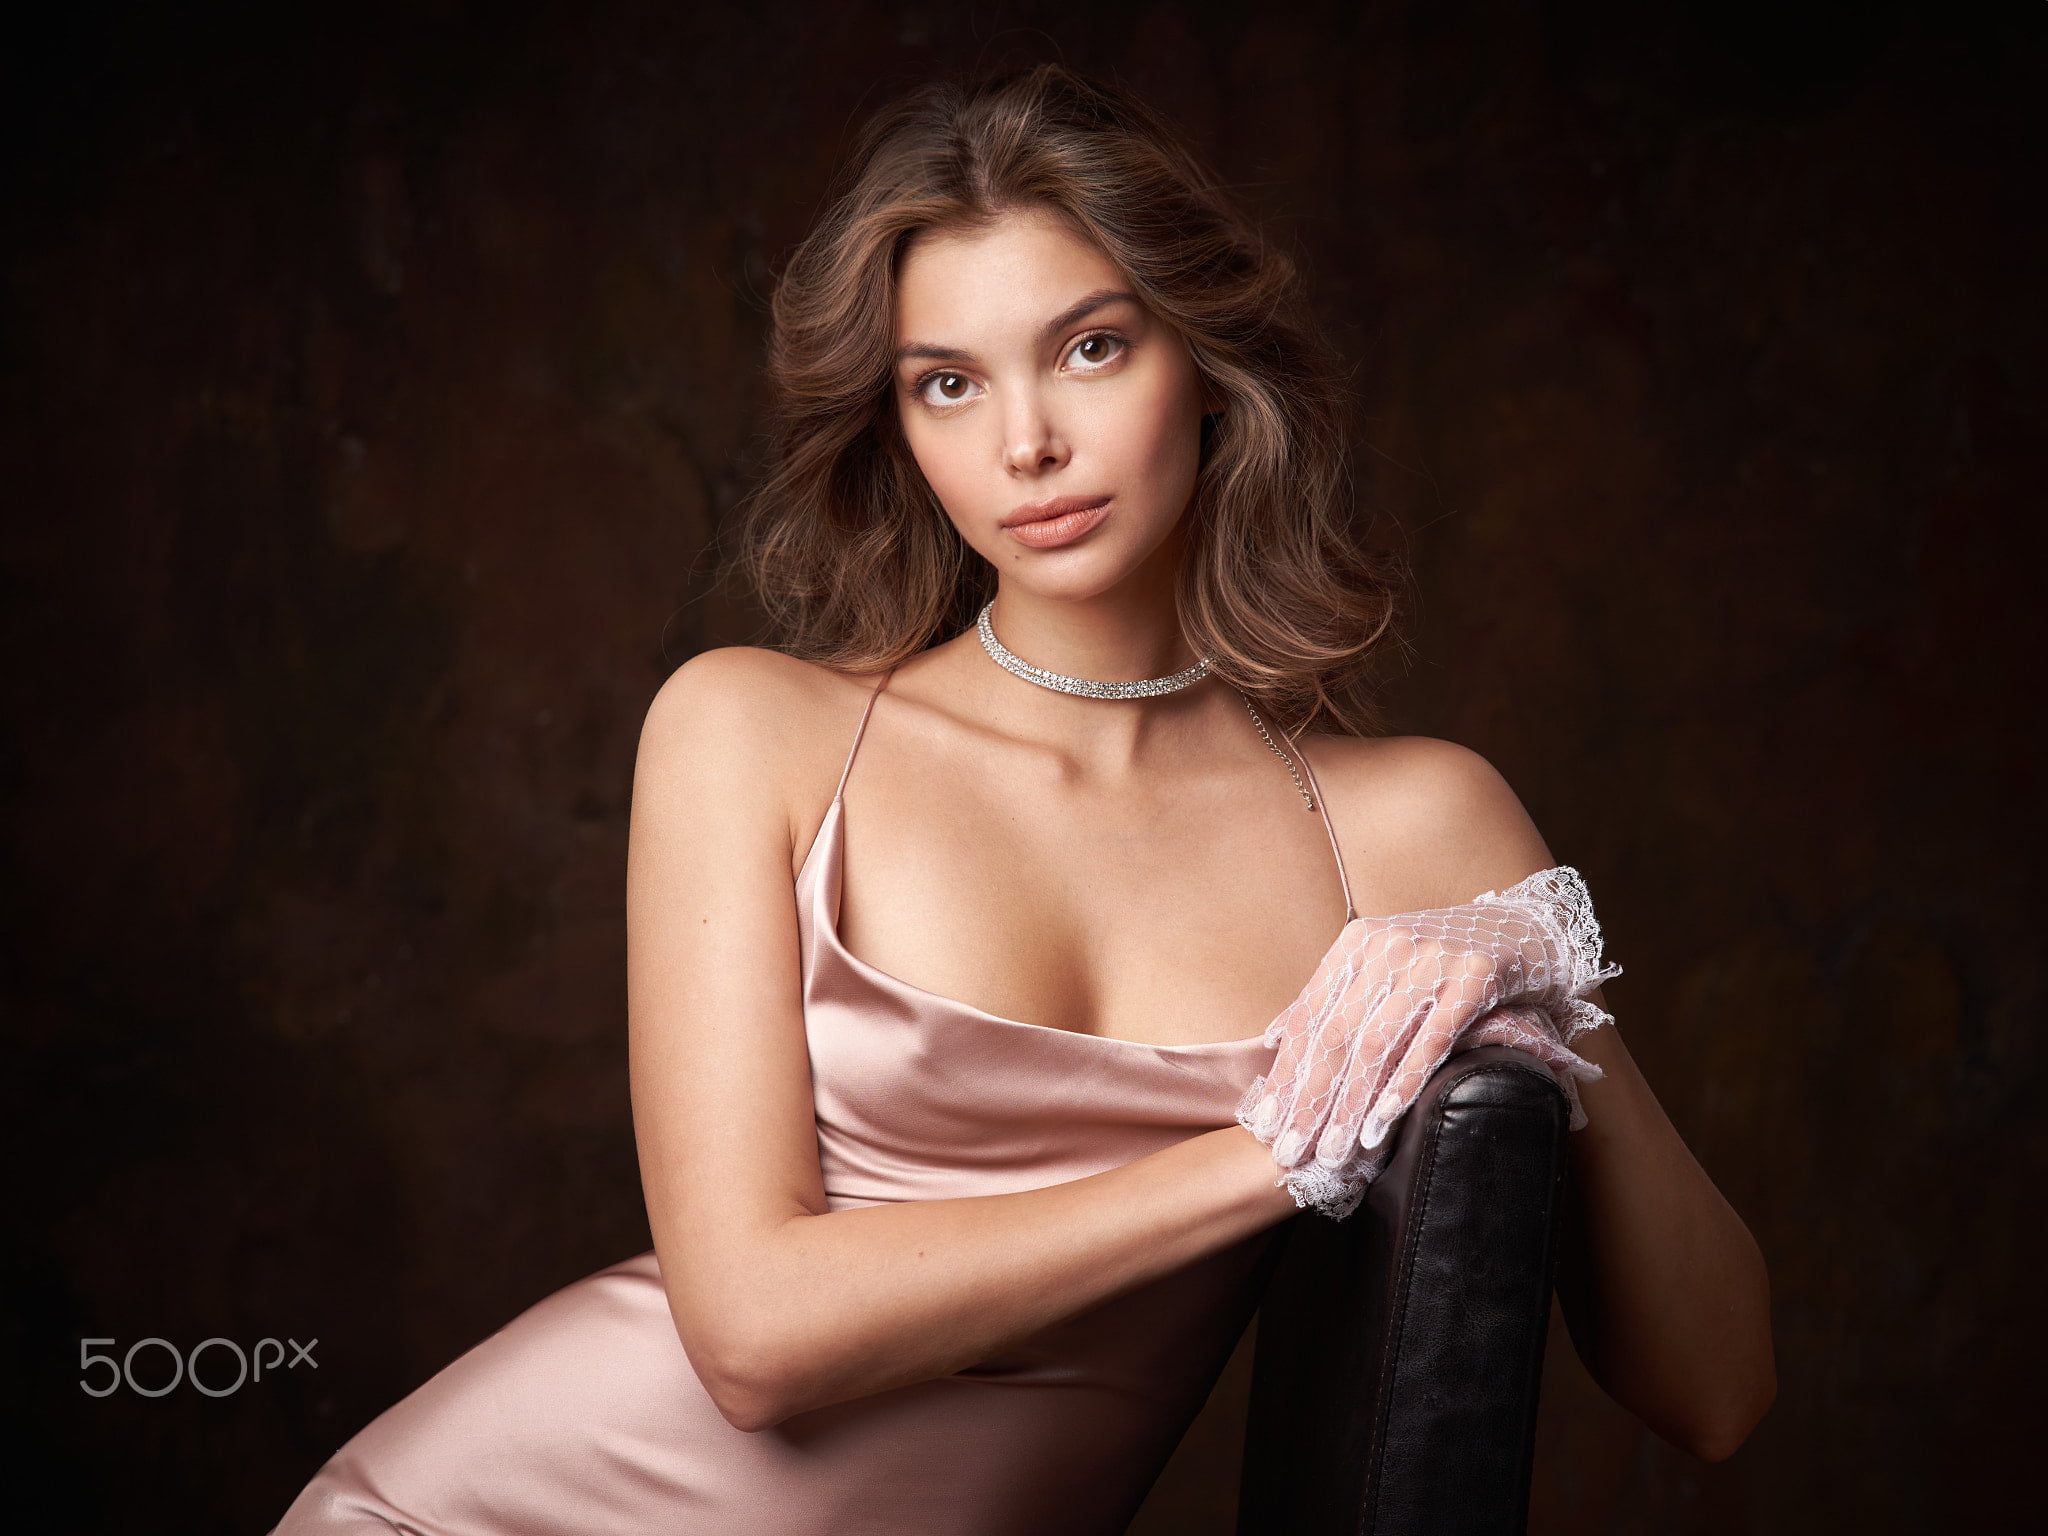 Free Download Hd Wallpaper Alexander Vinogradov Women Brunette Looking At Viewer Makeup